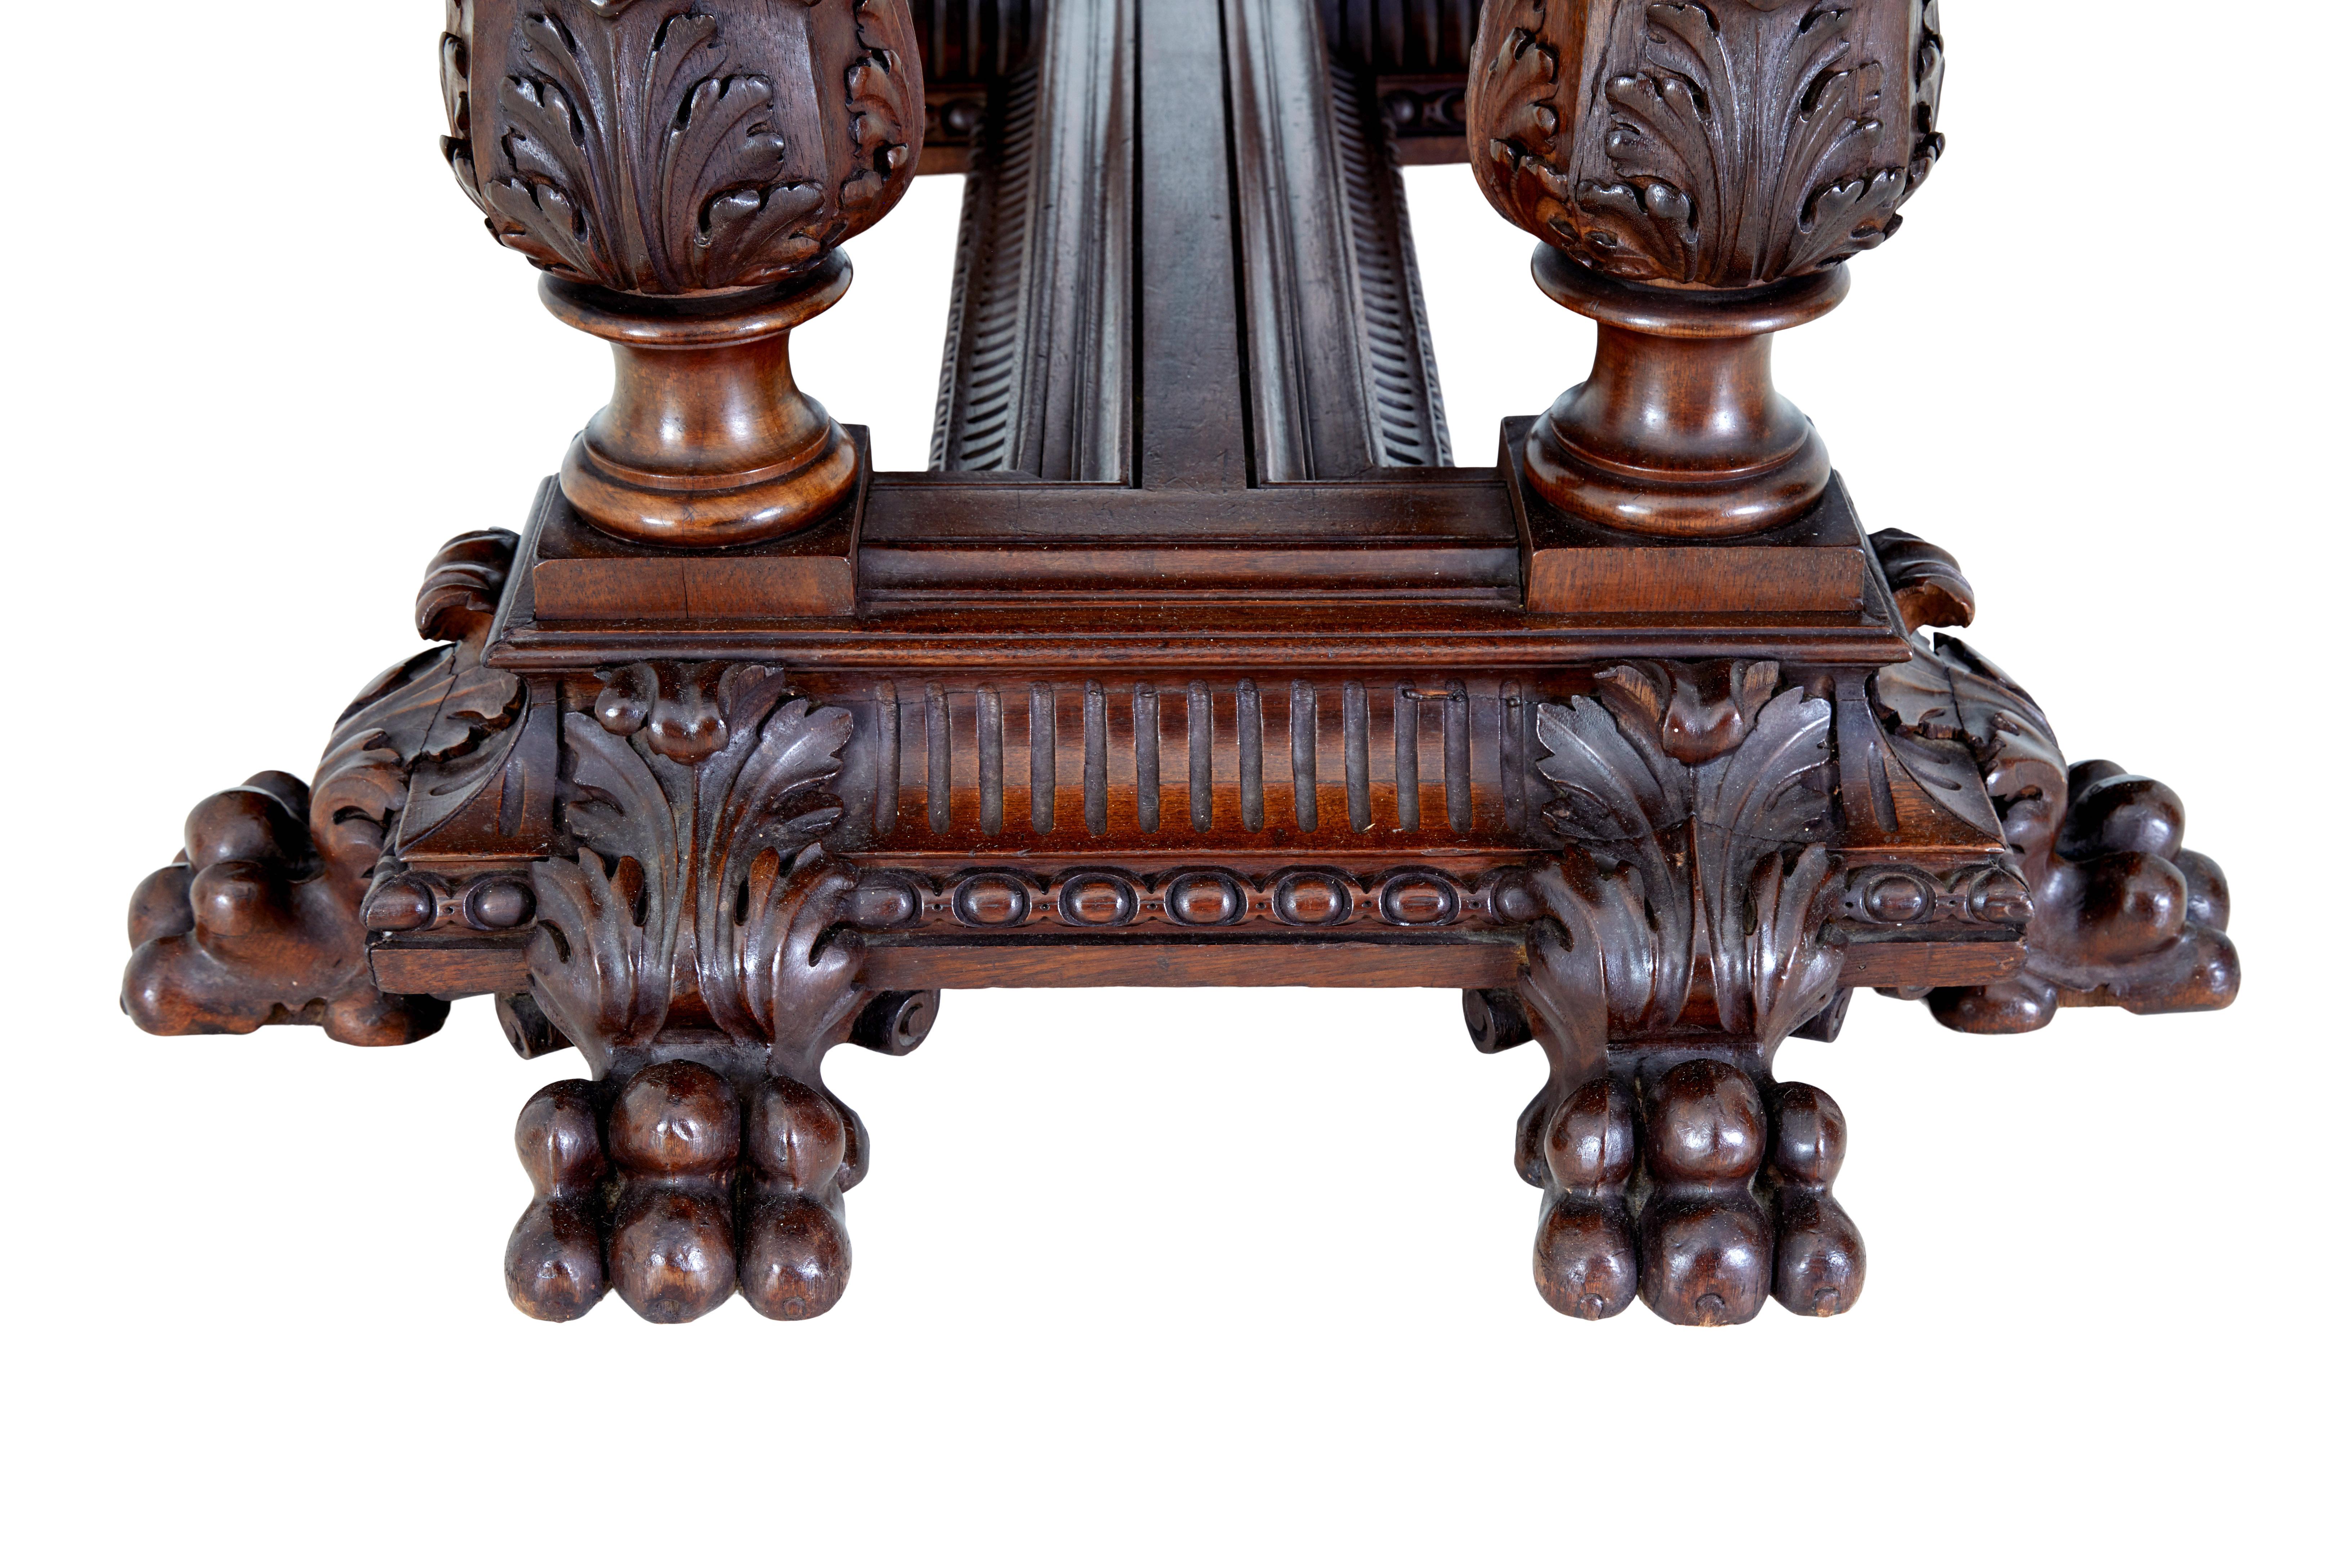 19th Century 19th century Italian carved walnut center table